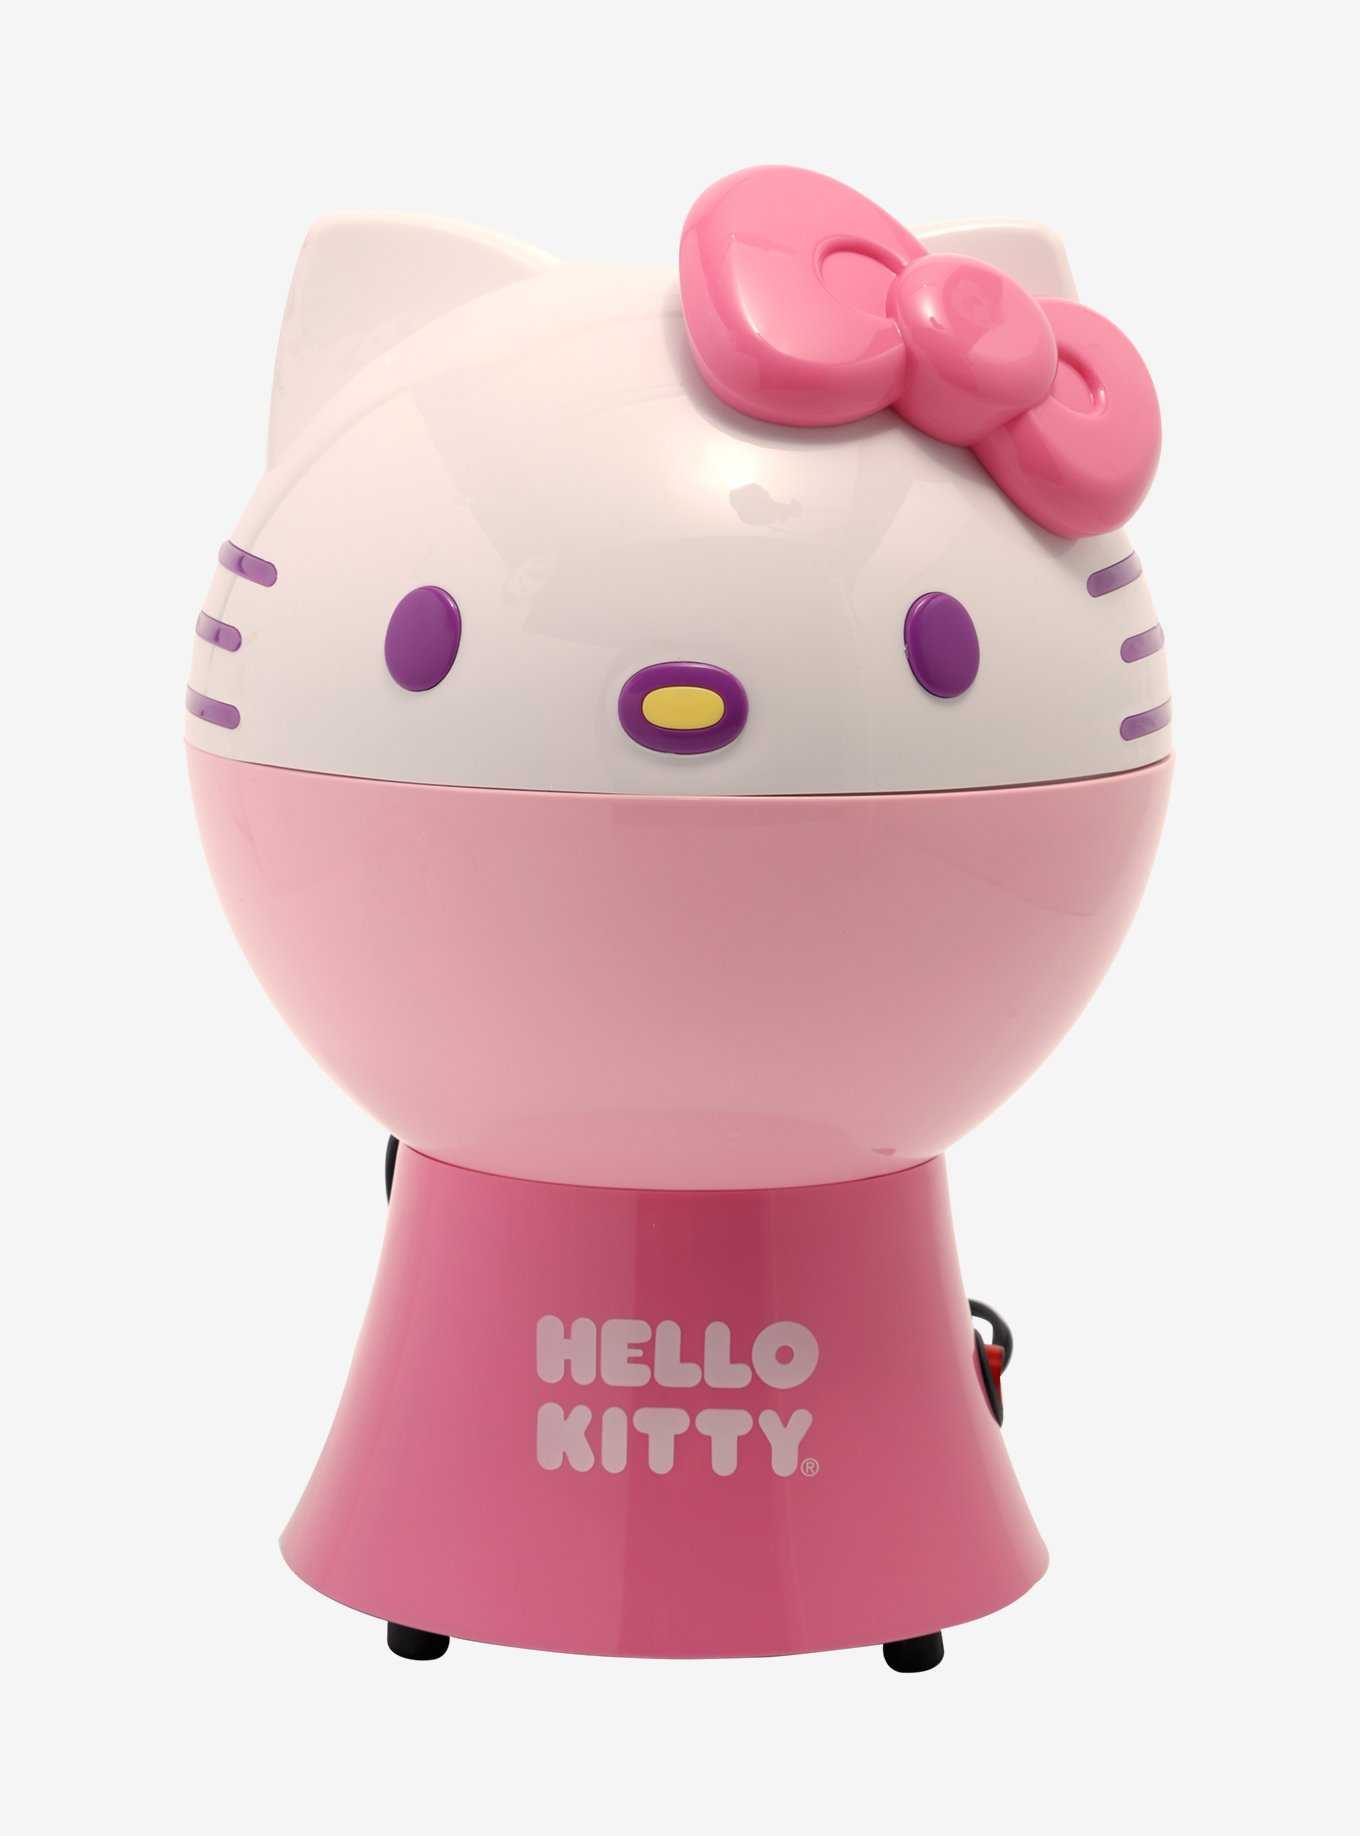 Sanrio Hello Kitty / My Melody / Pompom Purin Womens Underwear 3PC